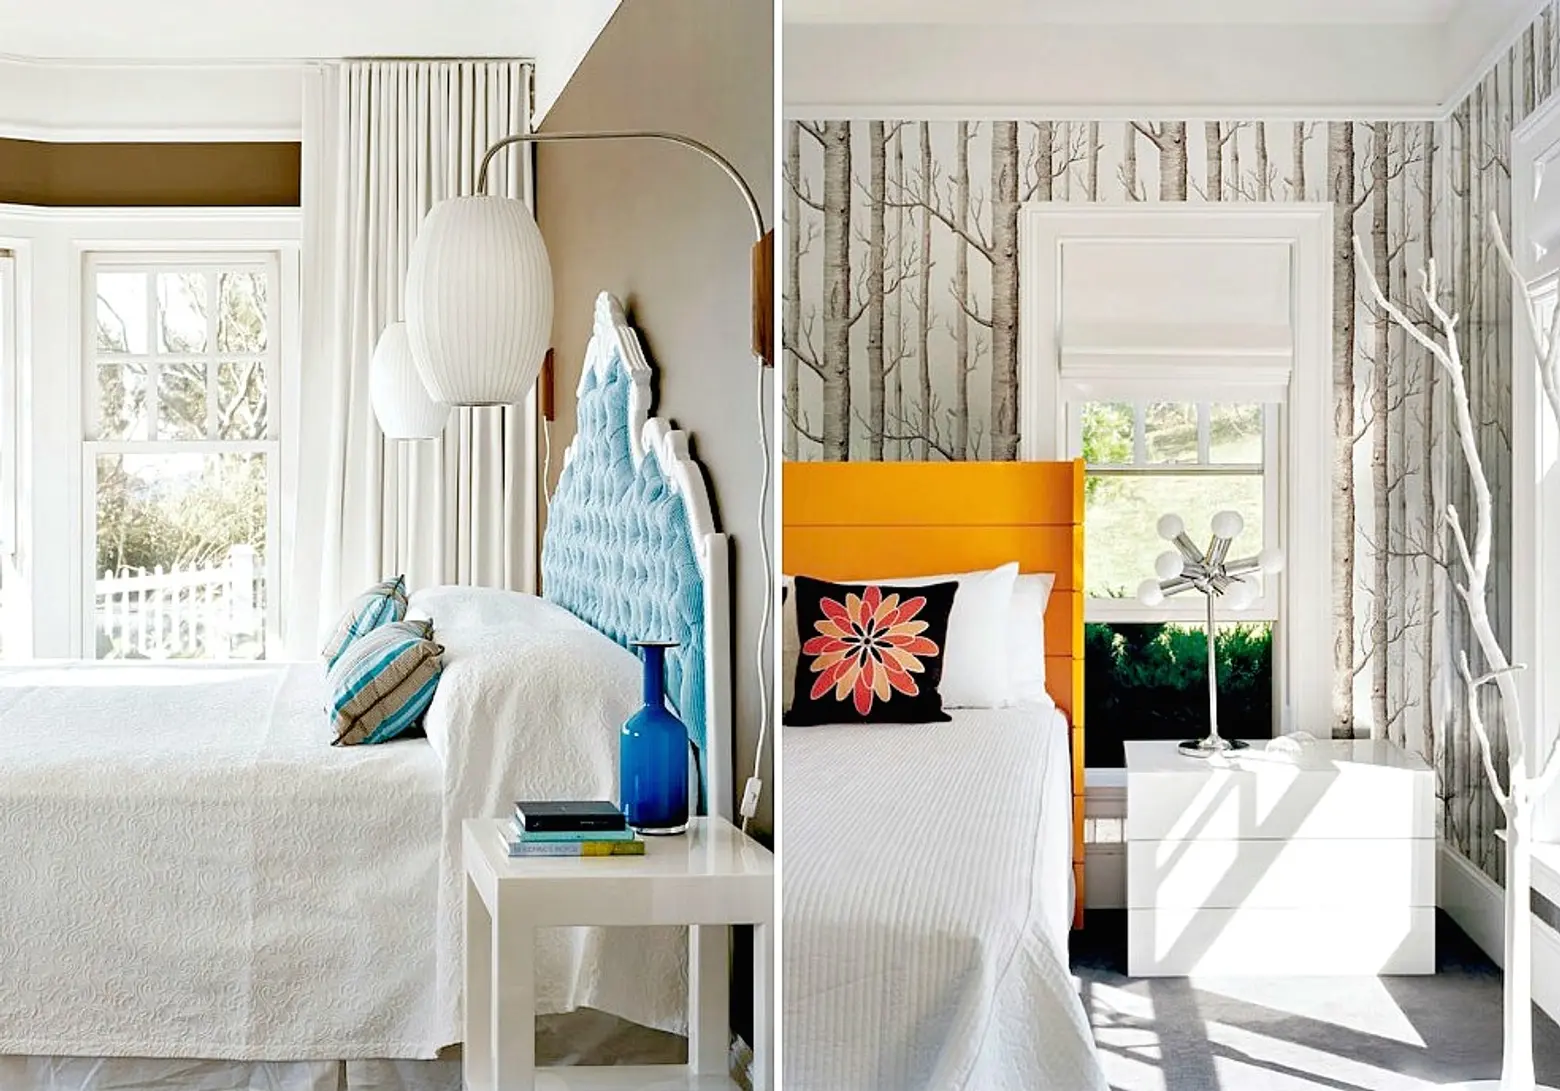 Ghislaine Vinas, Montauk Beach House, Interiors, Montauk, Getting Away, Decorating, Design, Hamptons